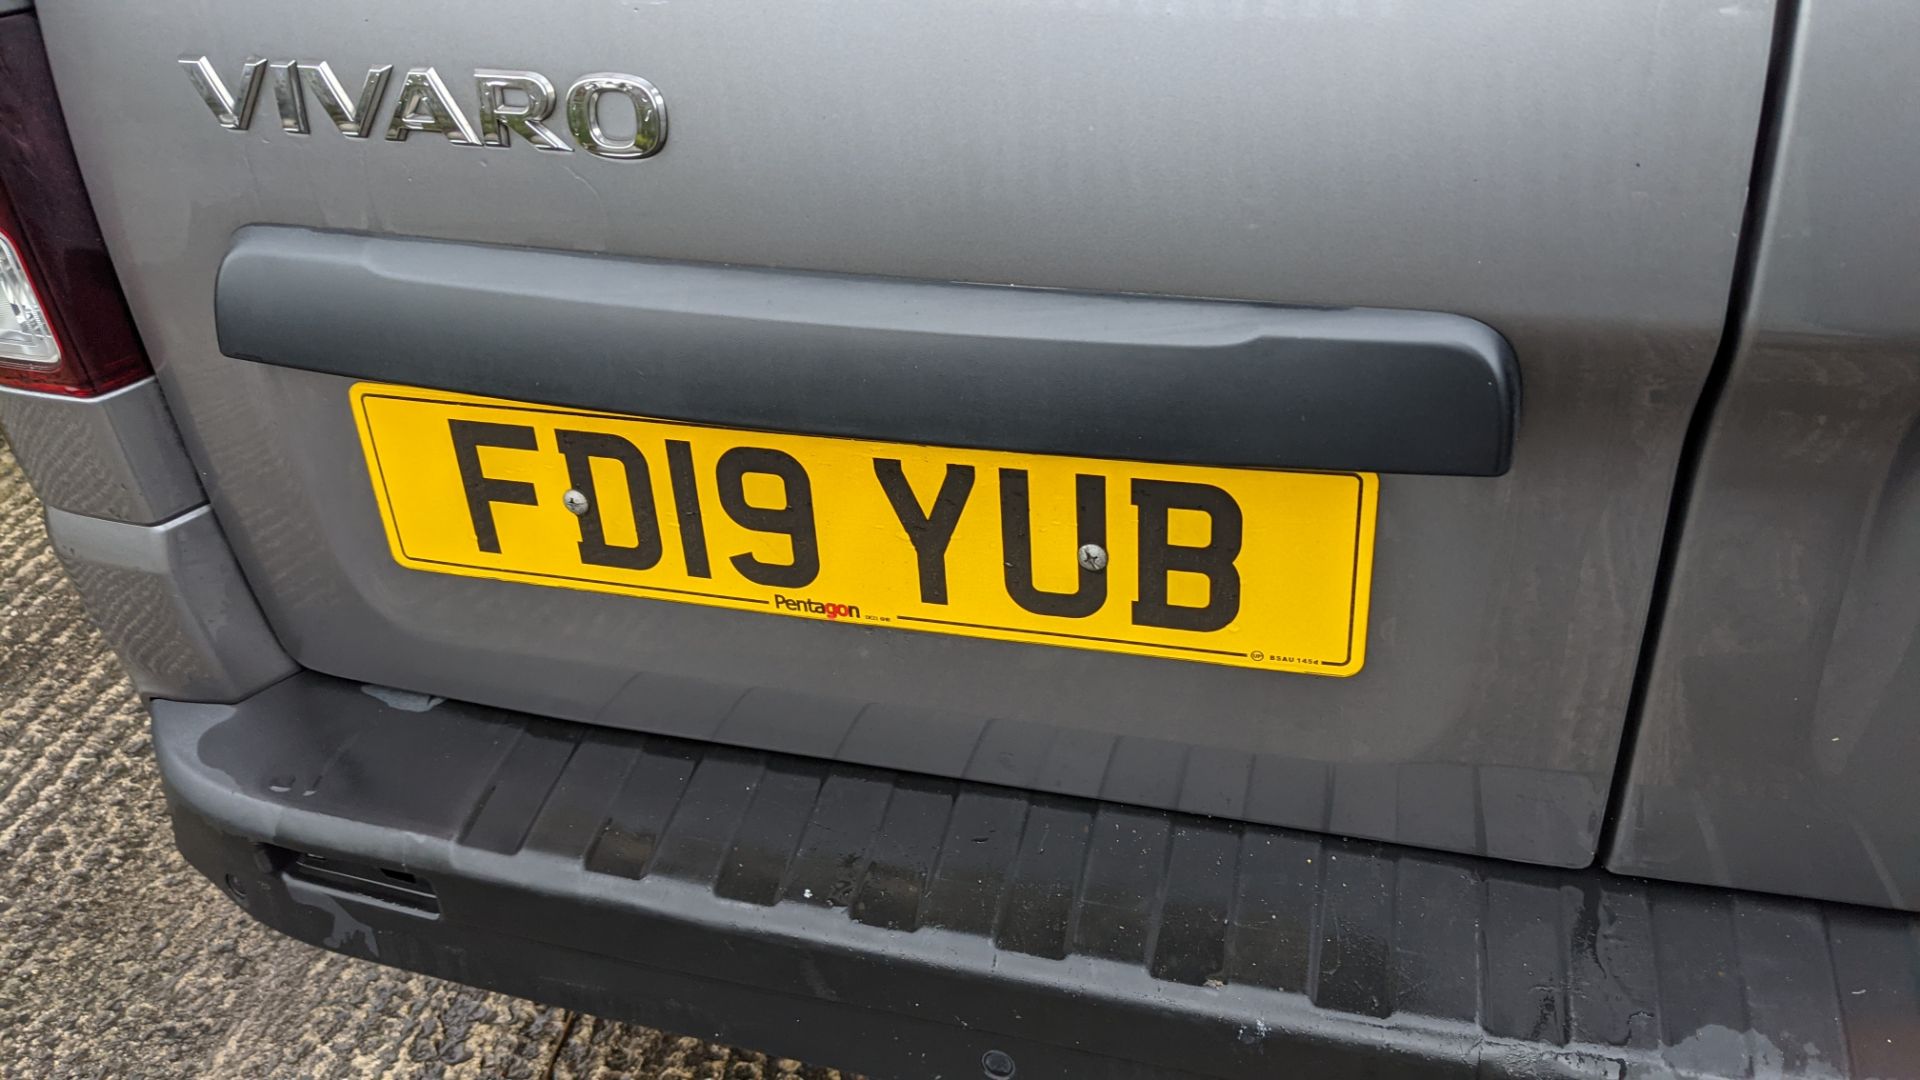 2019 Vauxhall Vivaro L2 2900 Sport CDTI BT SS panel van (Registration FD19 YUB) - Image 38 of 55